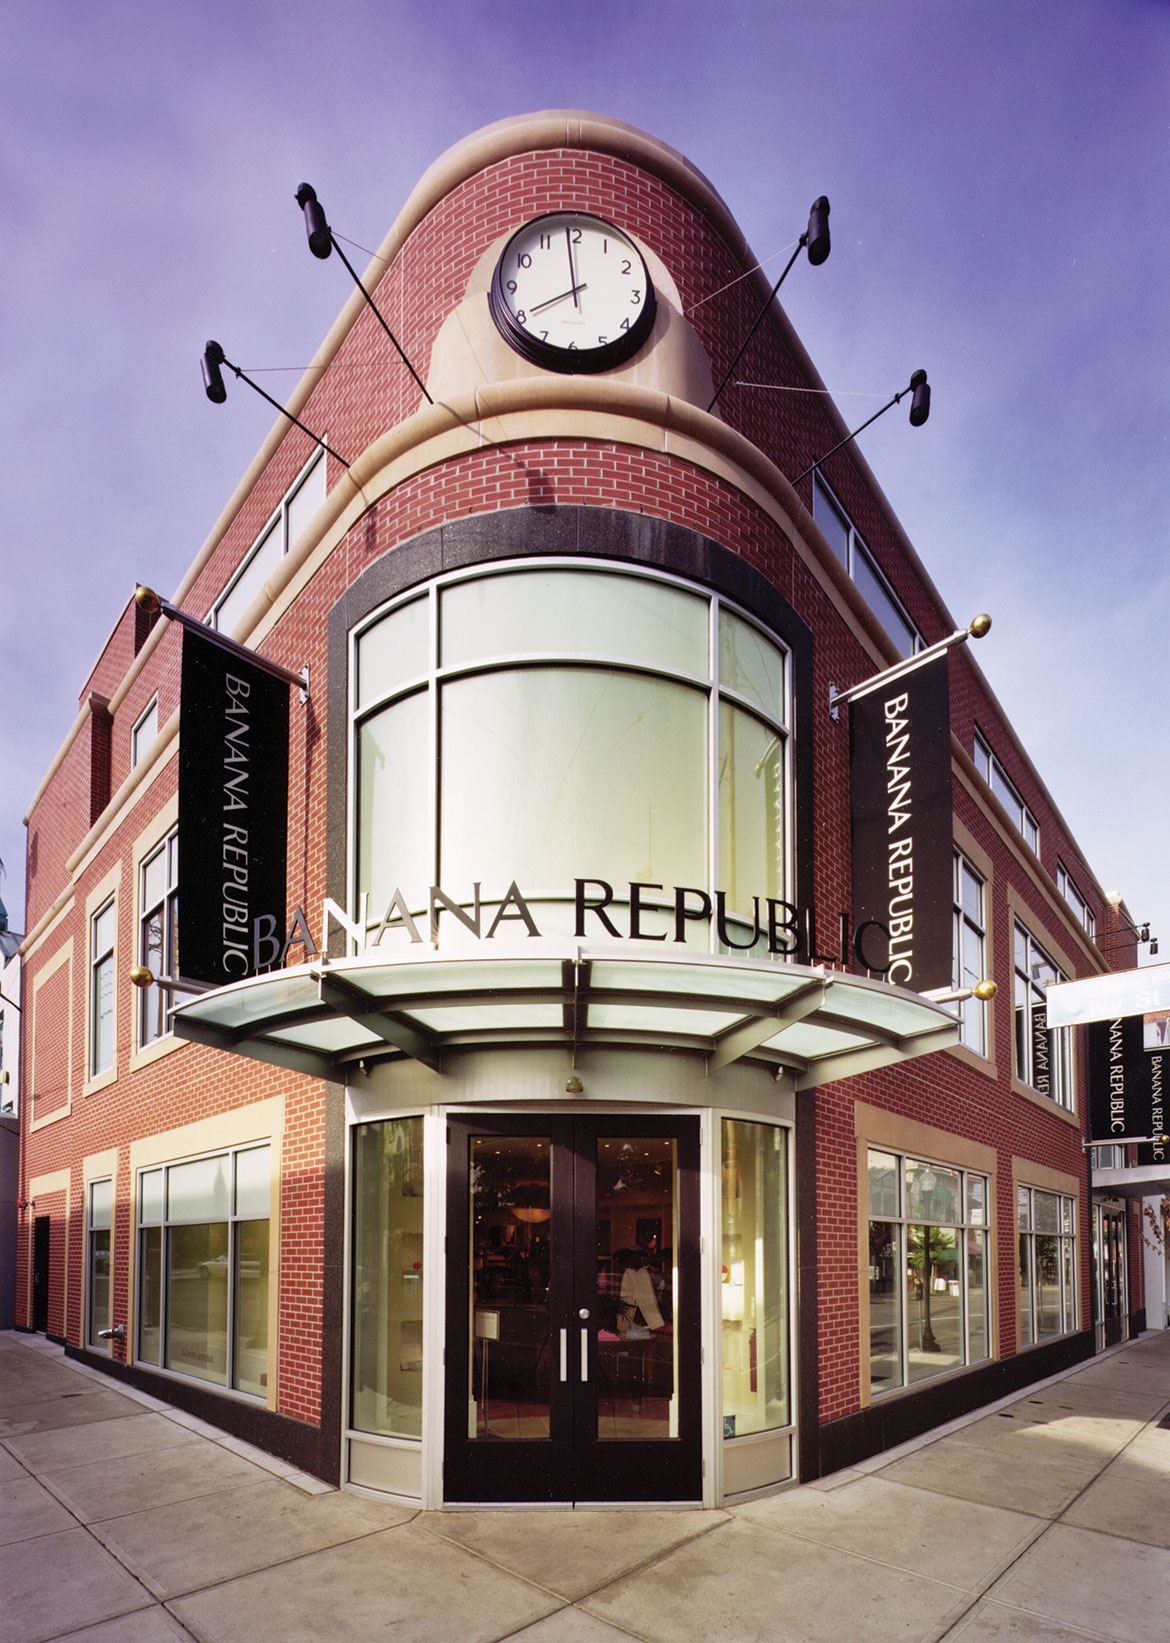 Banana Republic retail store on Walnut Street